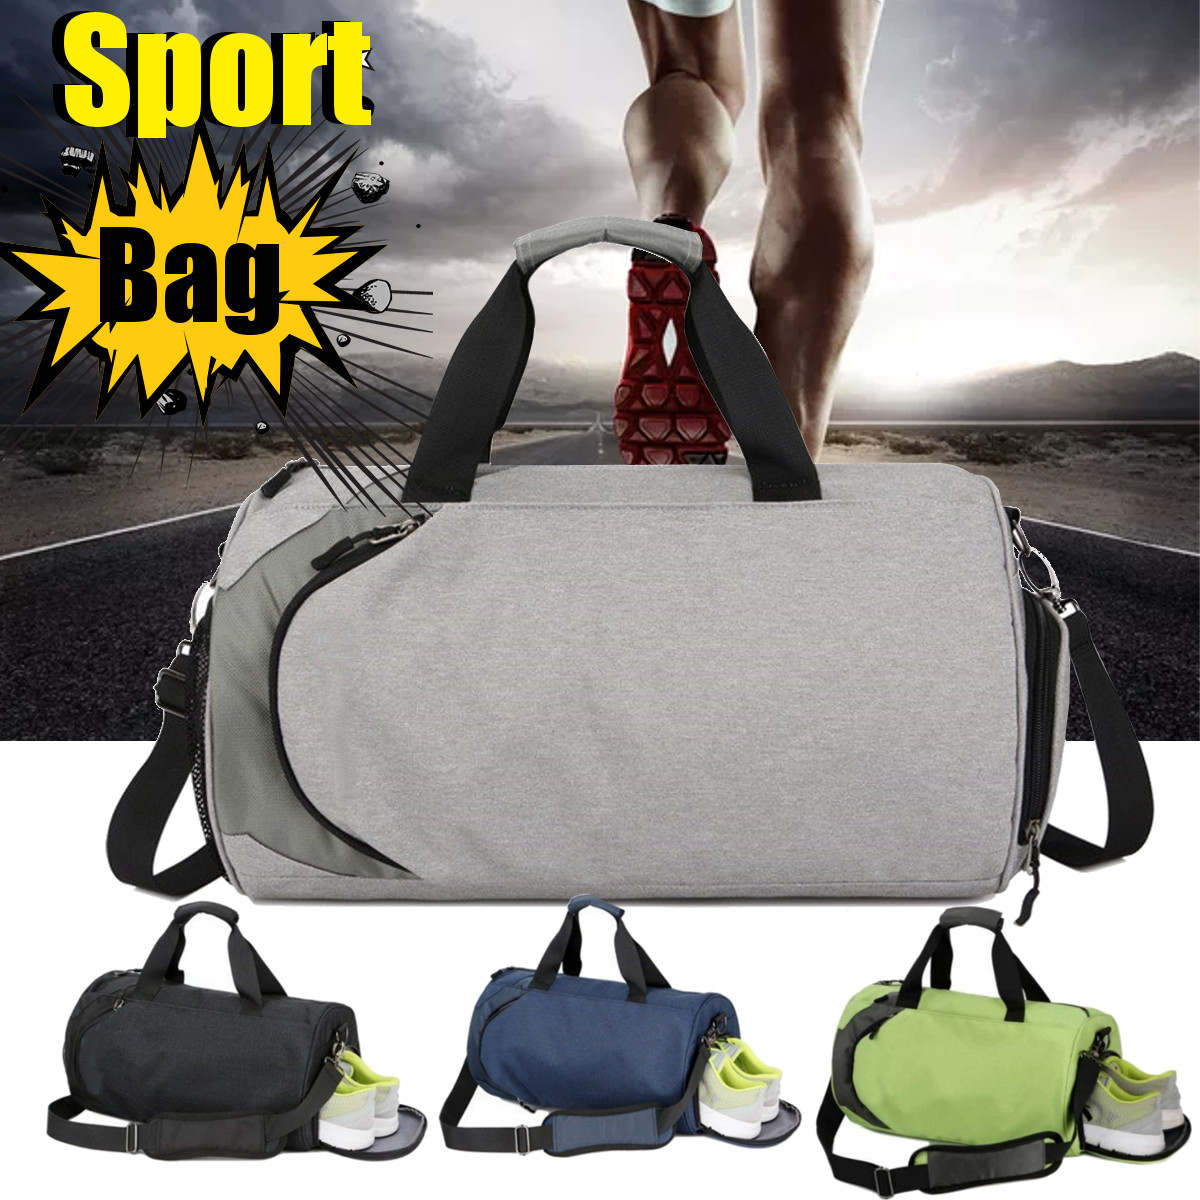 Waterproof-Multifunctional-Yoga-Bag-Outdoor-Sport-Travel-Fitness-Gym-Trainning-Handbag-Luggage-1518296-1